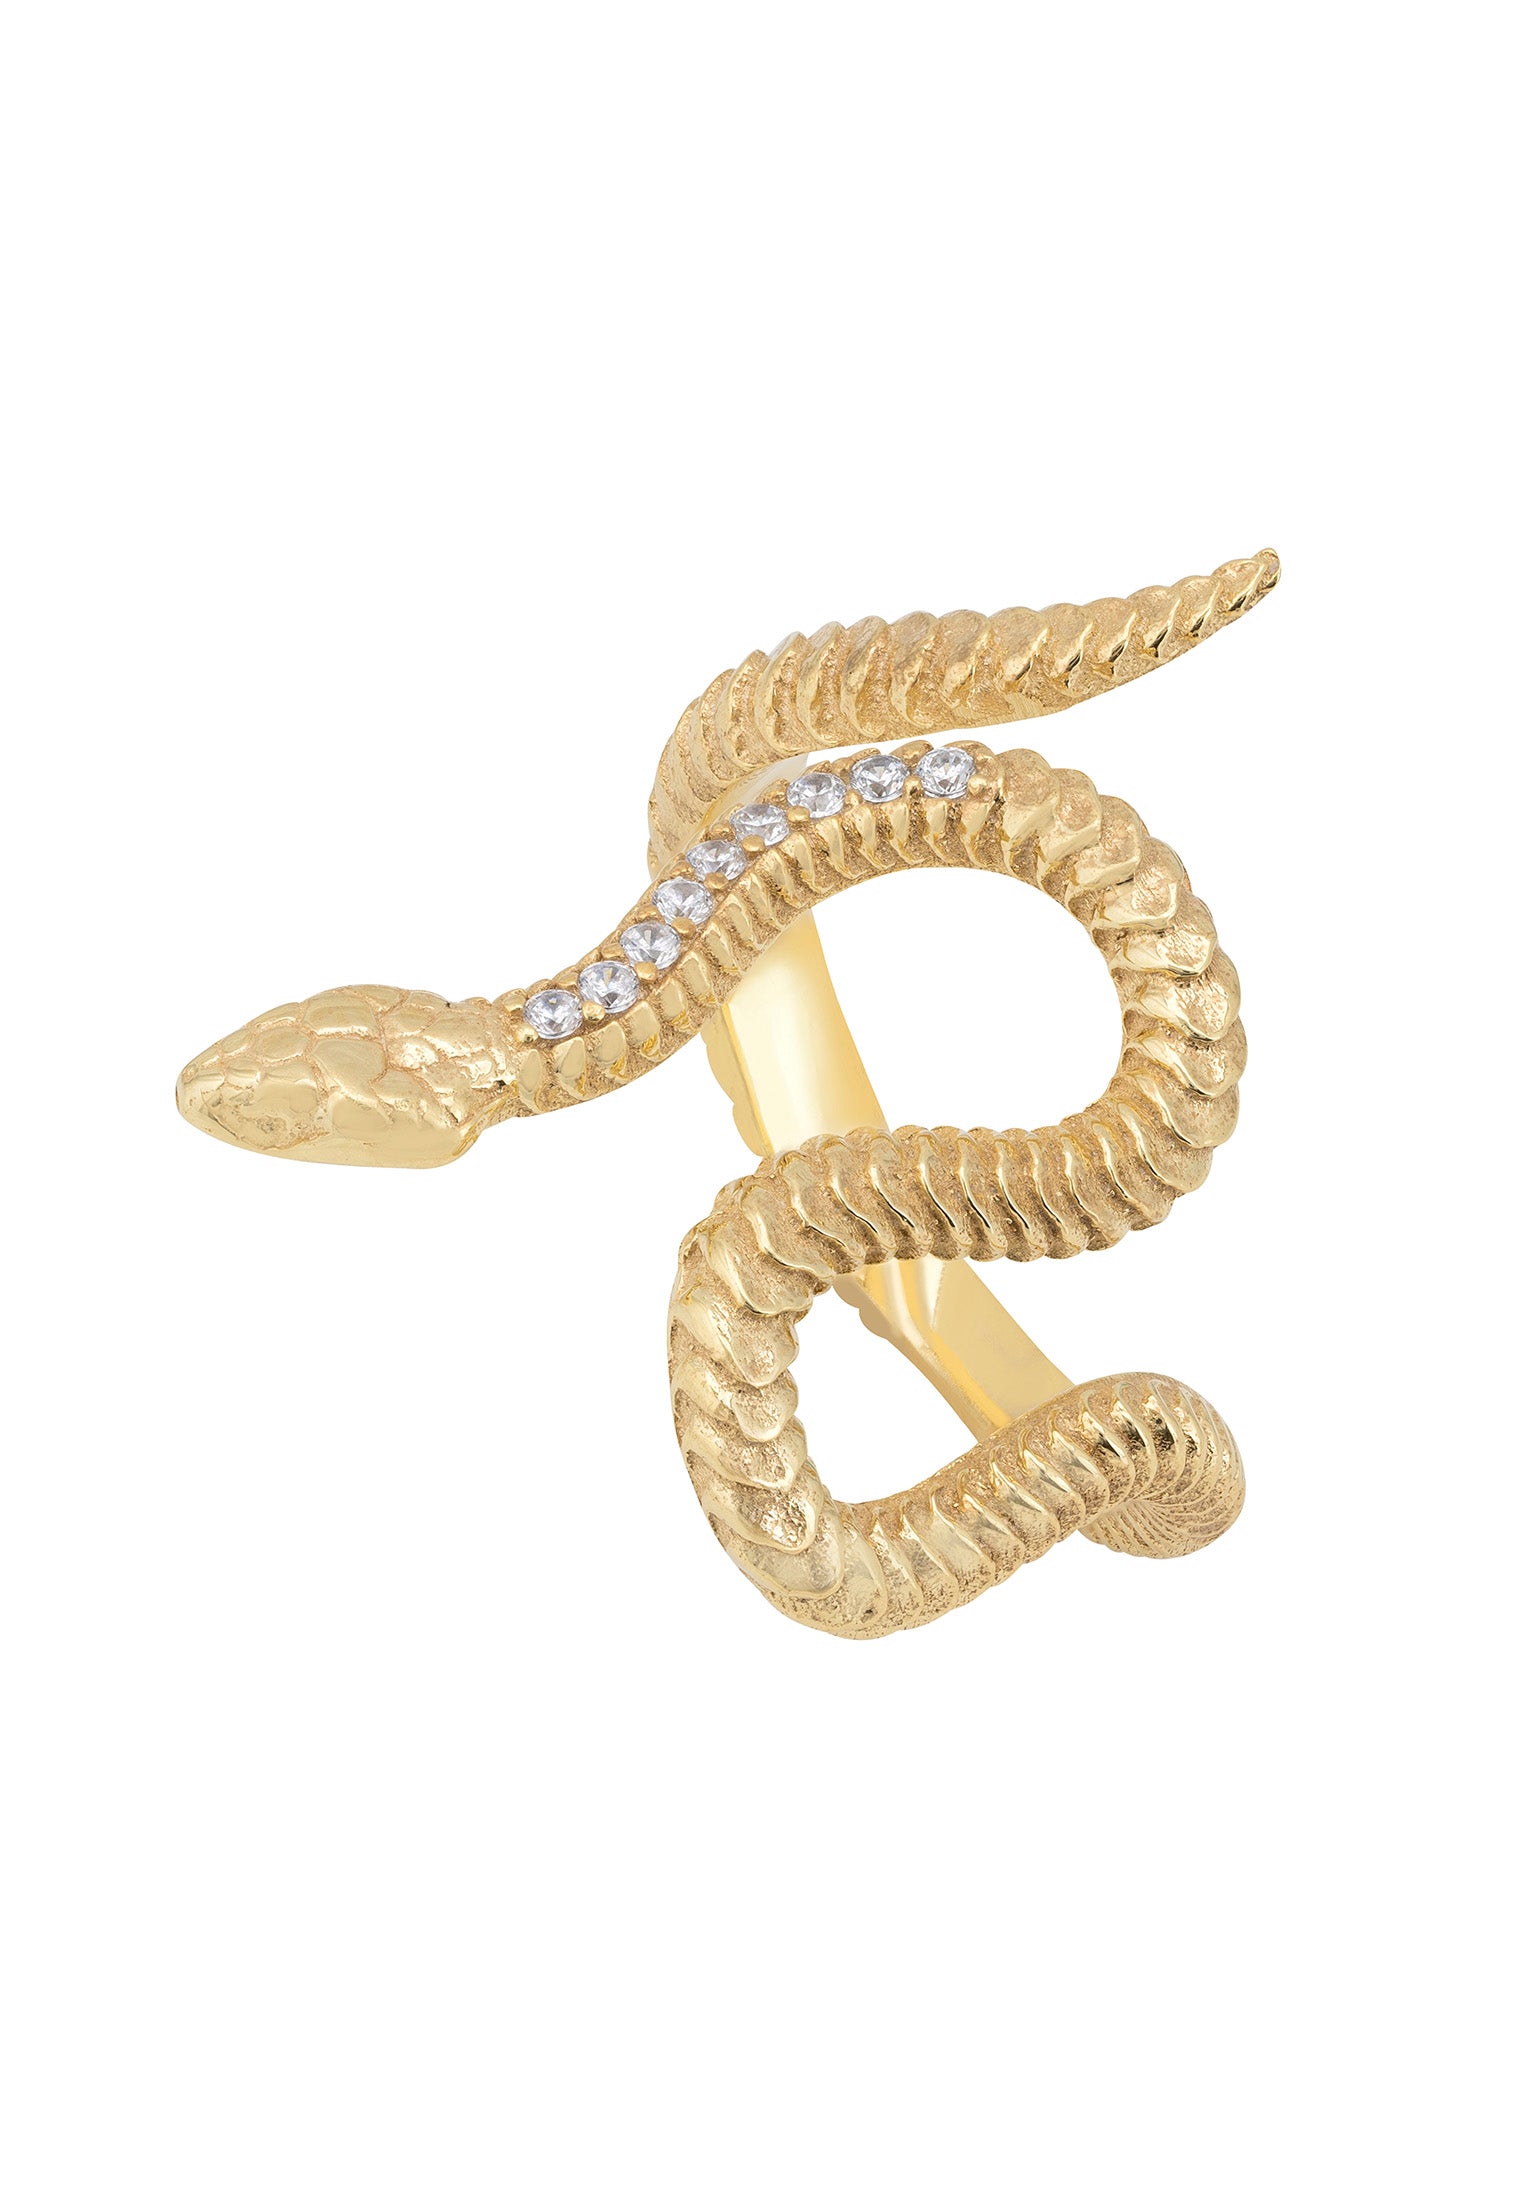 Pharaoh Twist Snake Cocktail Ring Gold